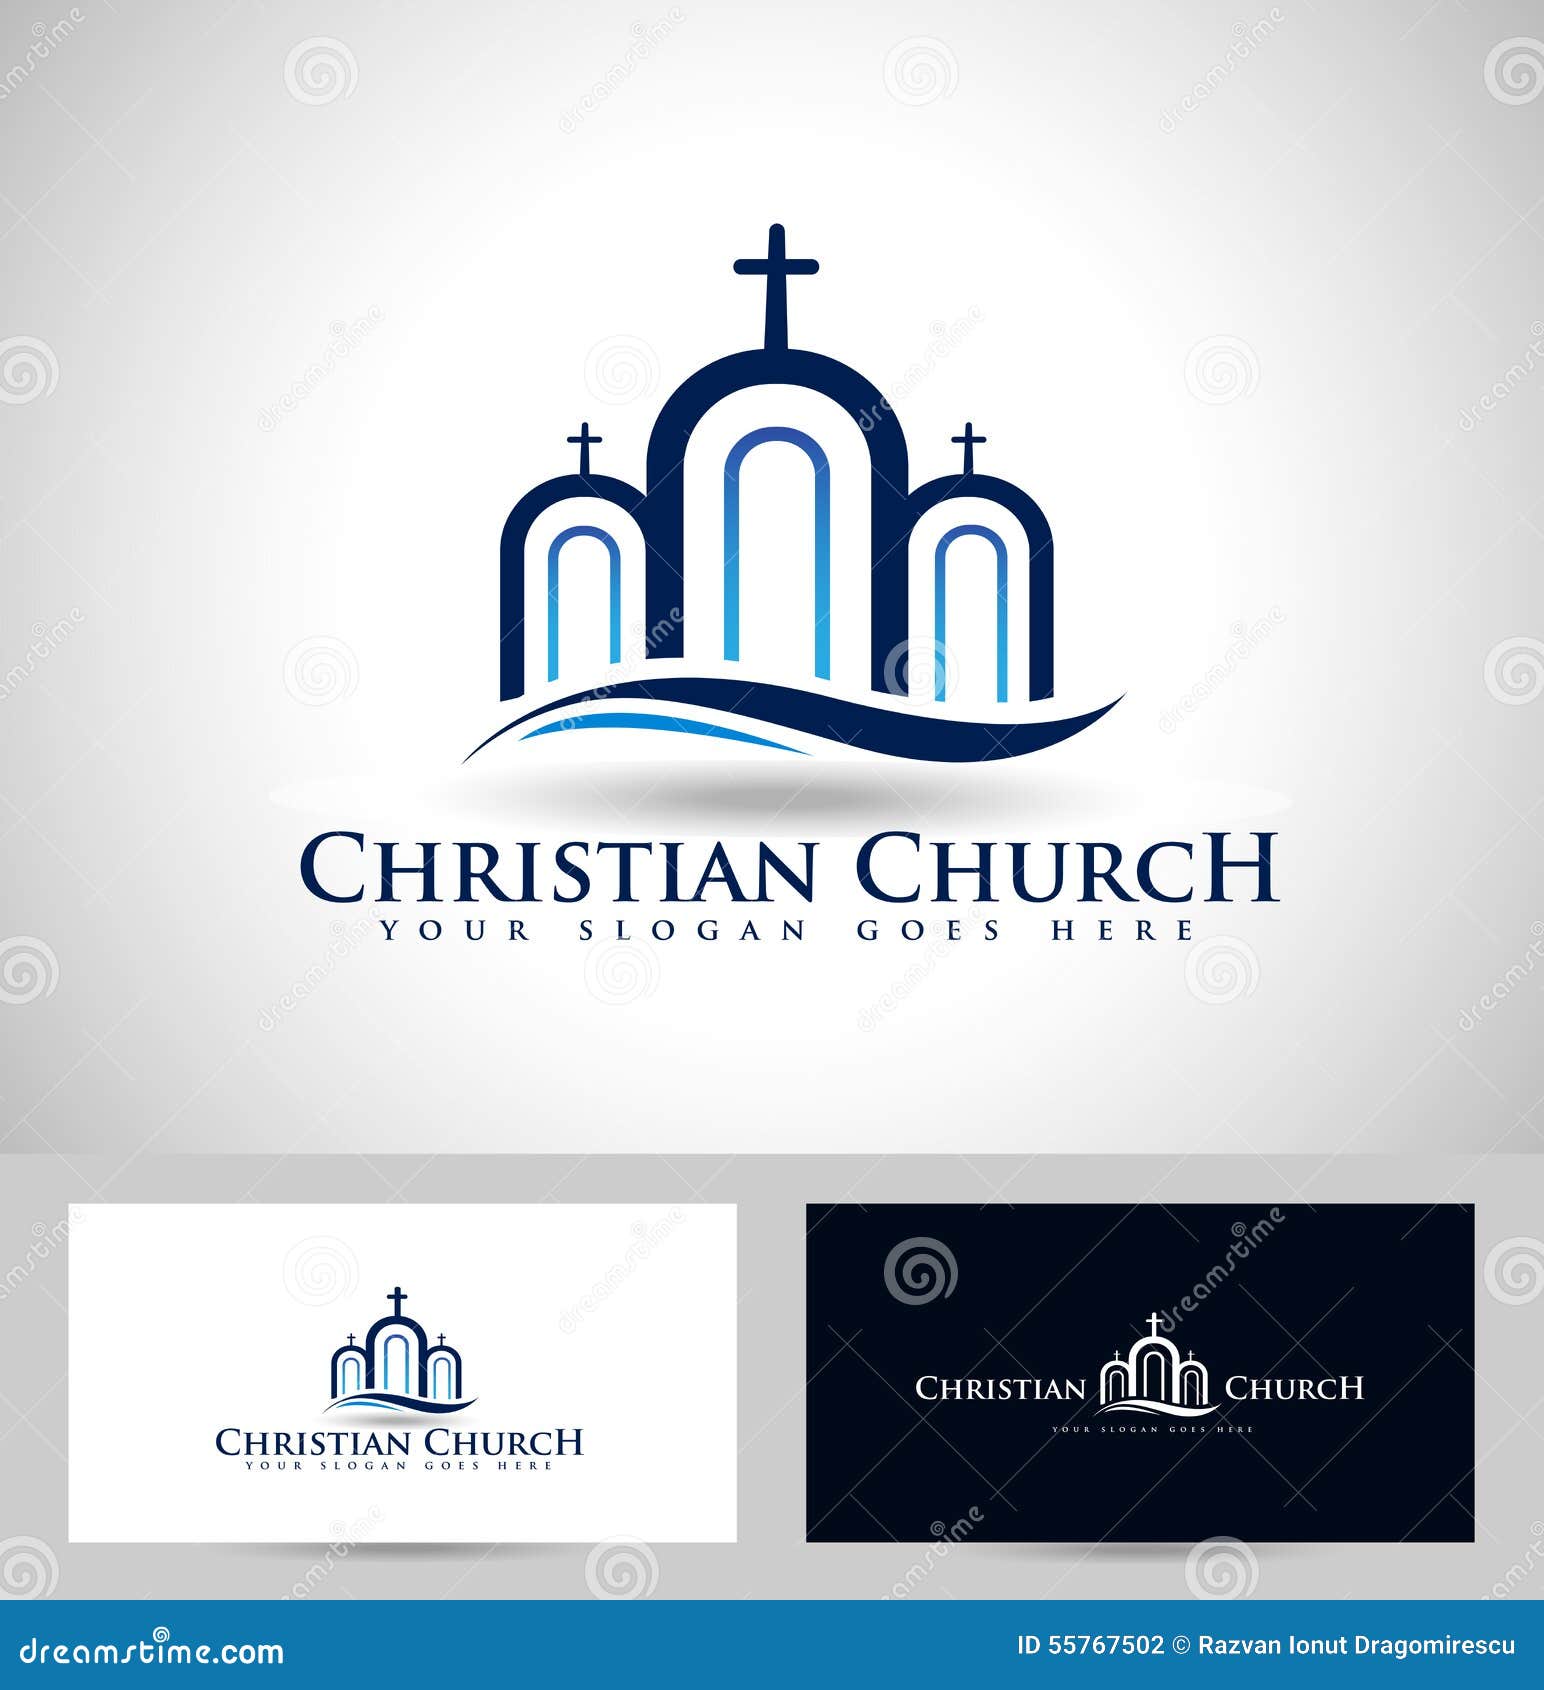 Free Church Logo Design Software